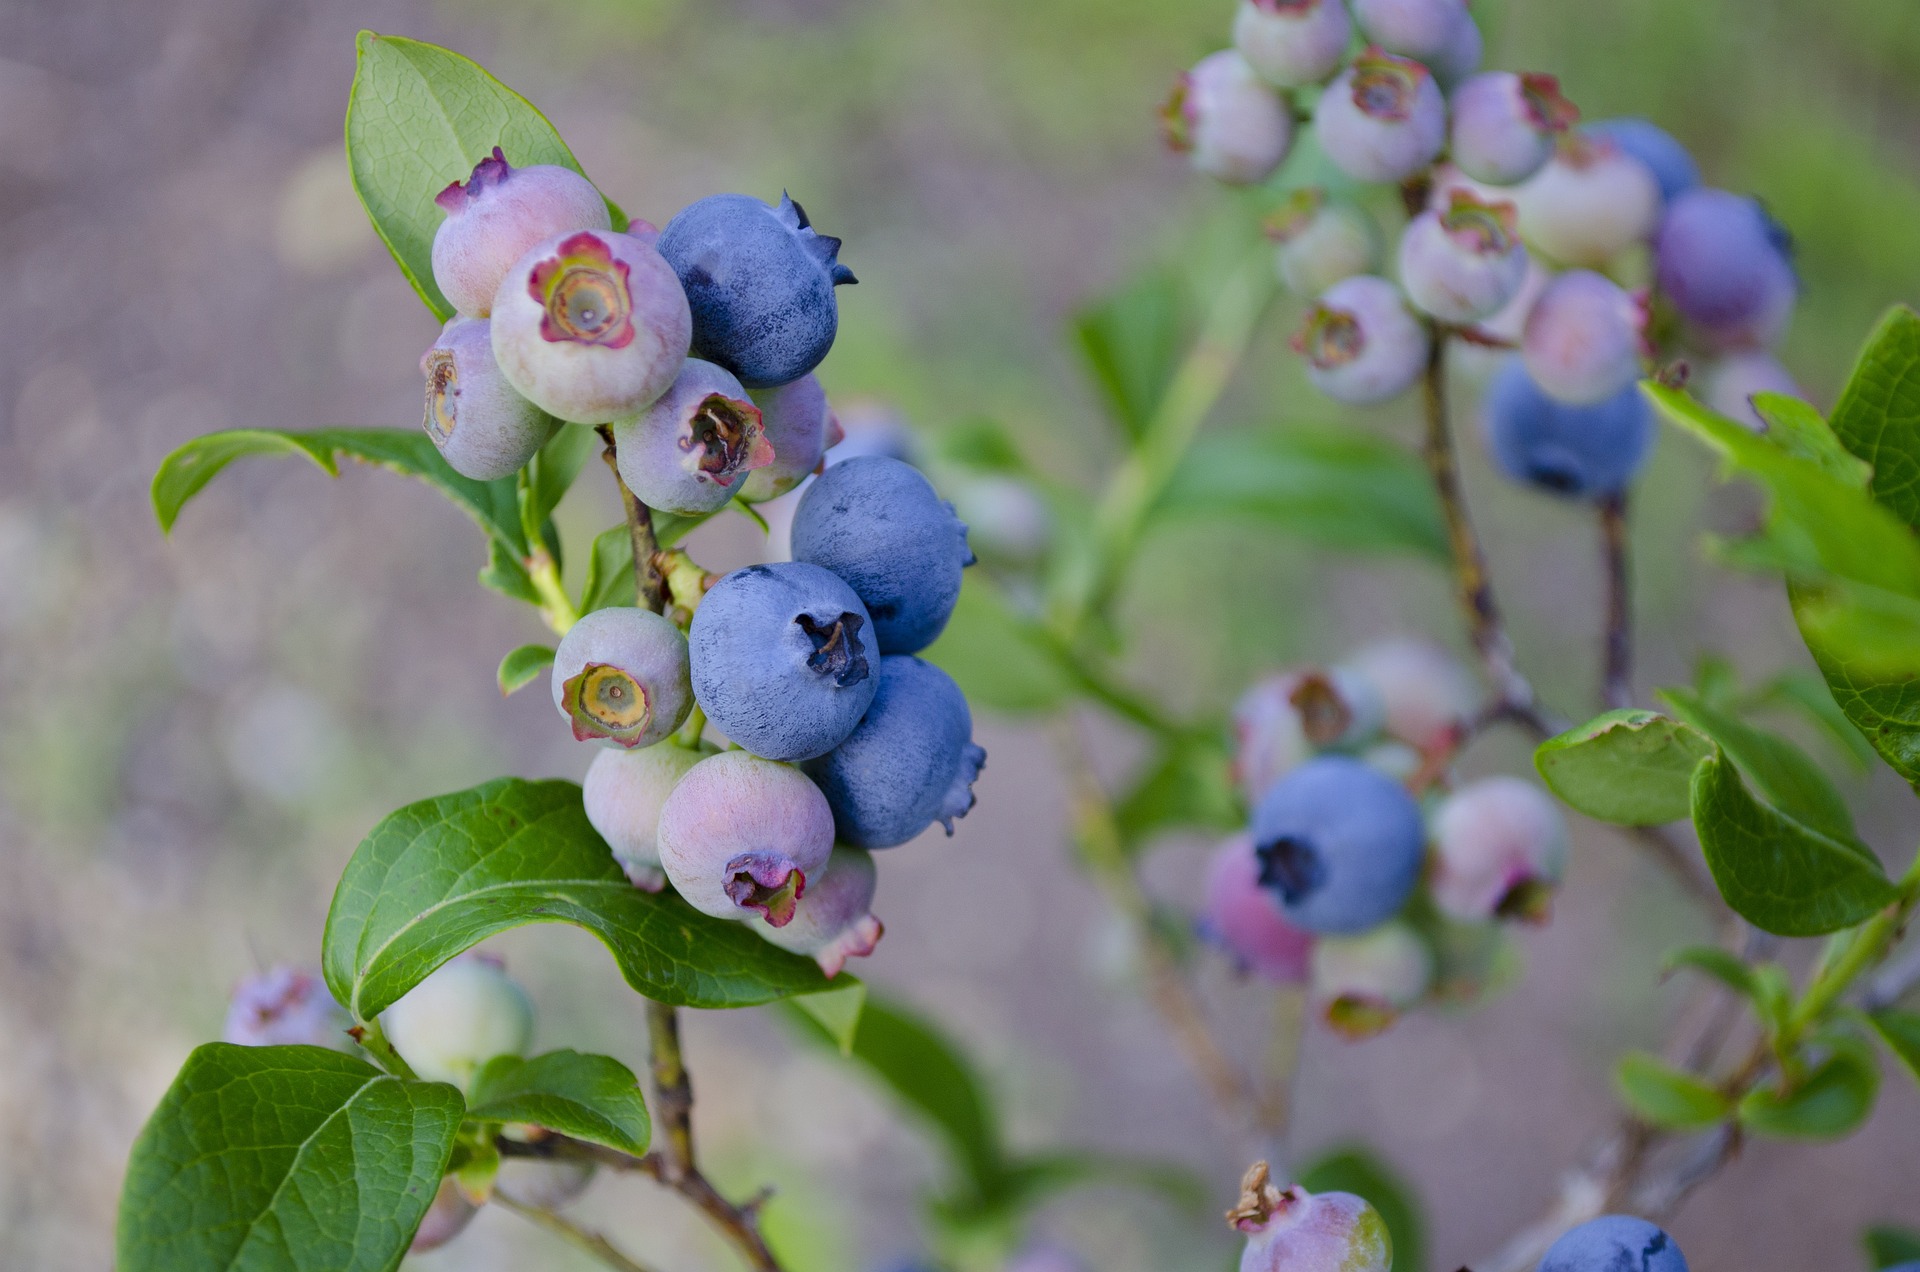 Blueberry bush.